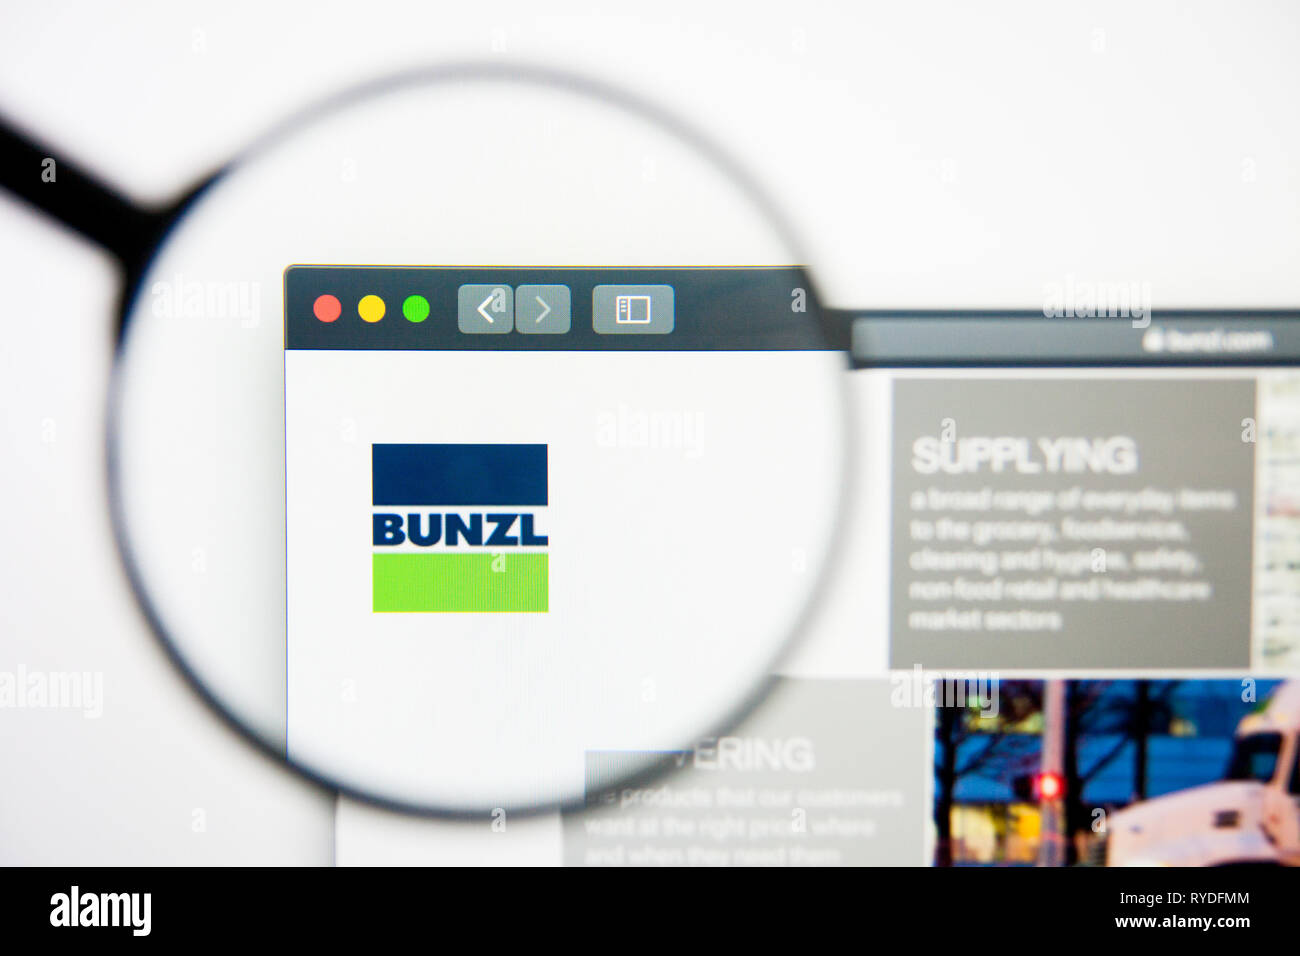 Los Angeles, California, USA - 28 February 2019: Bunzl website homepage. Bunzl logo visible on display screen, Illustrative Editorial Stock Photo